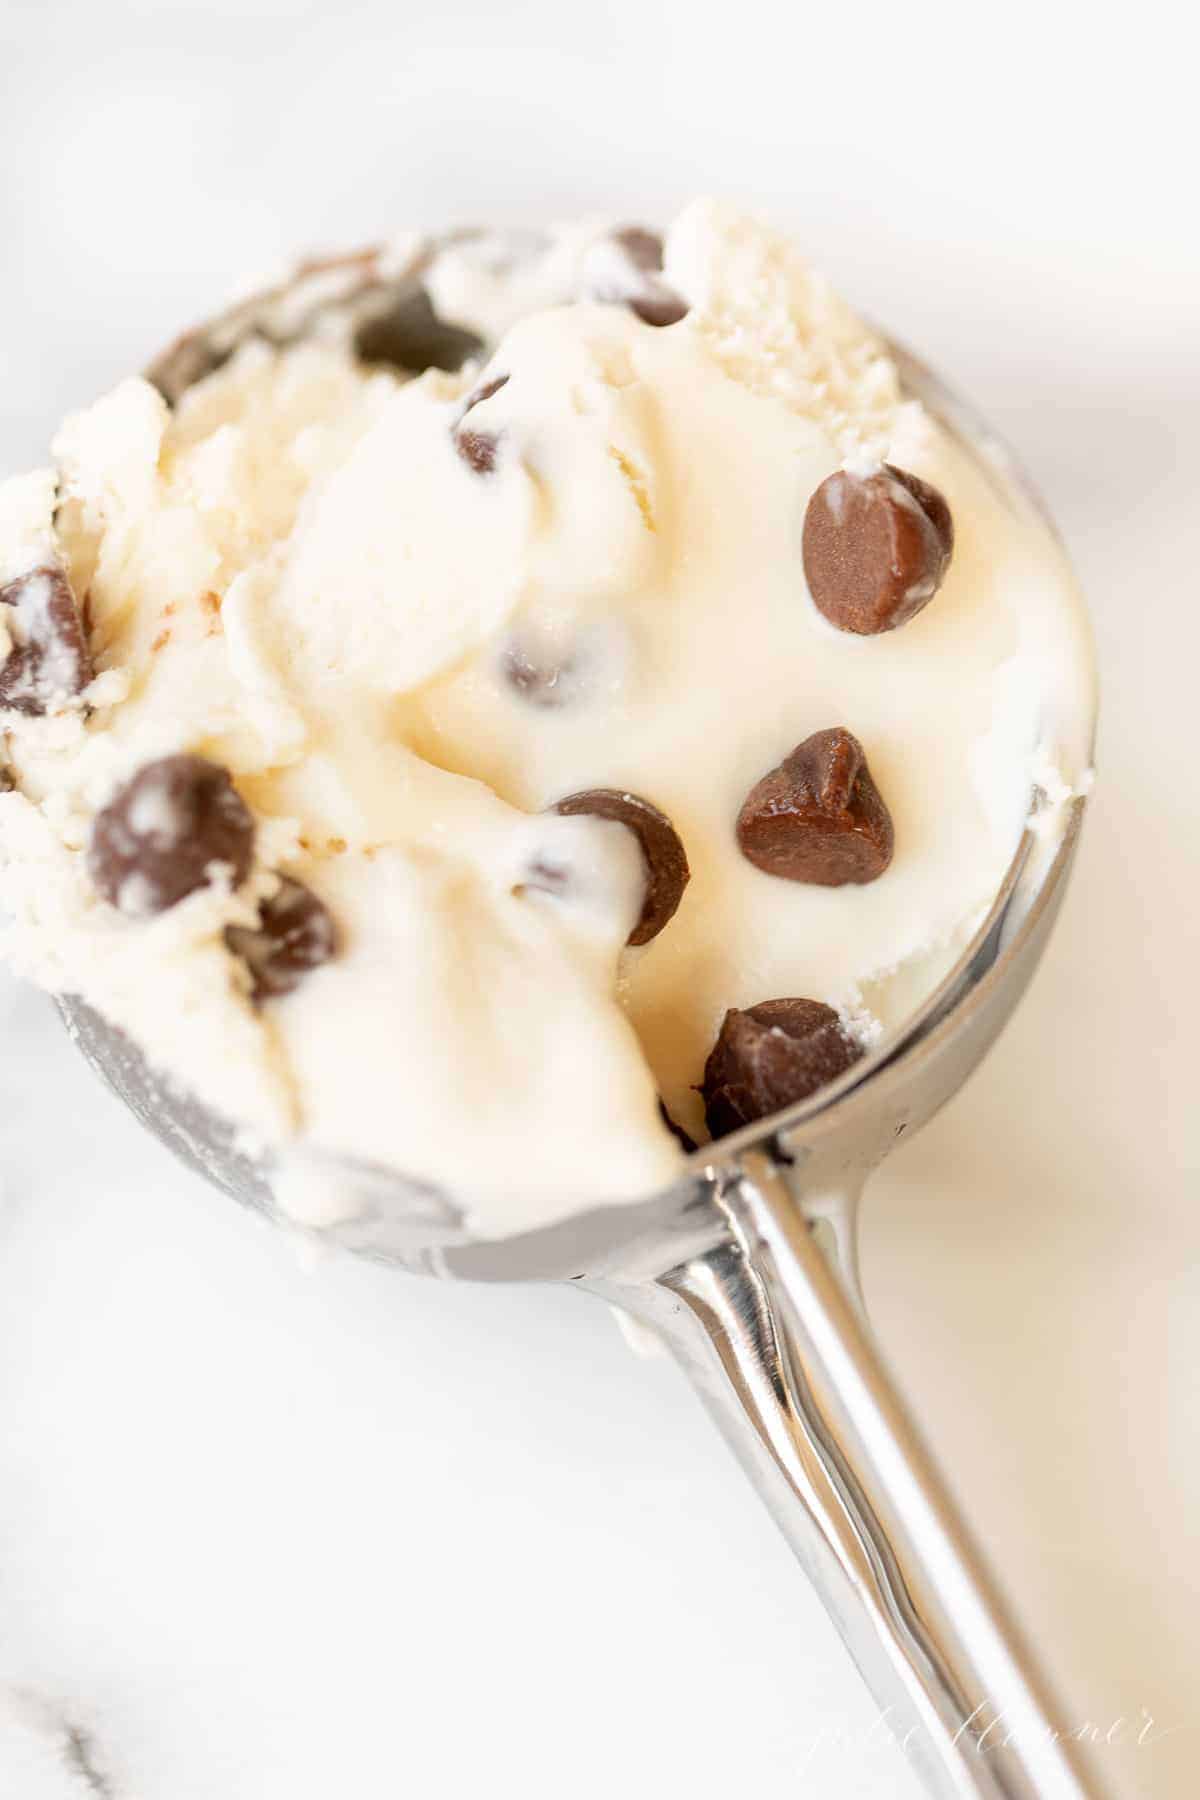 Chocolate chip ice cream on an ice cream scoop